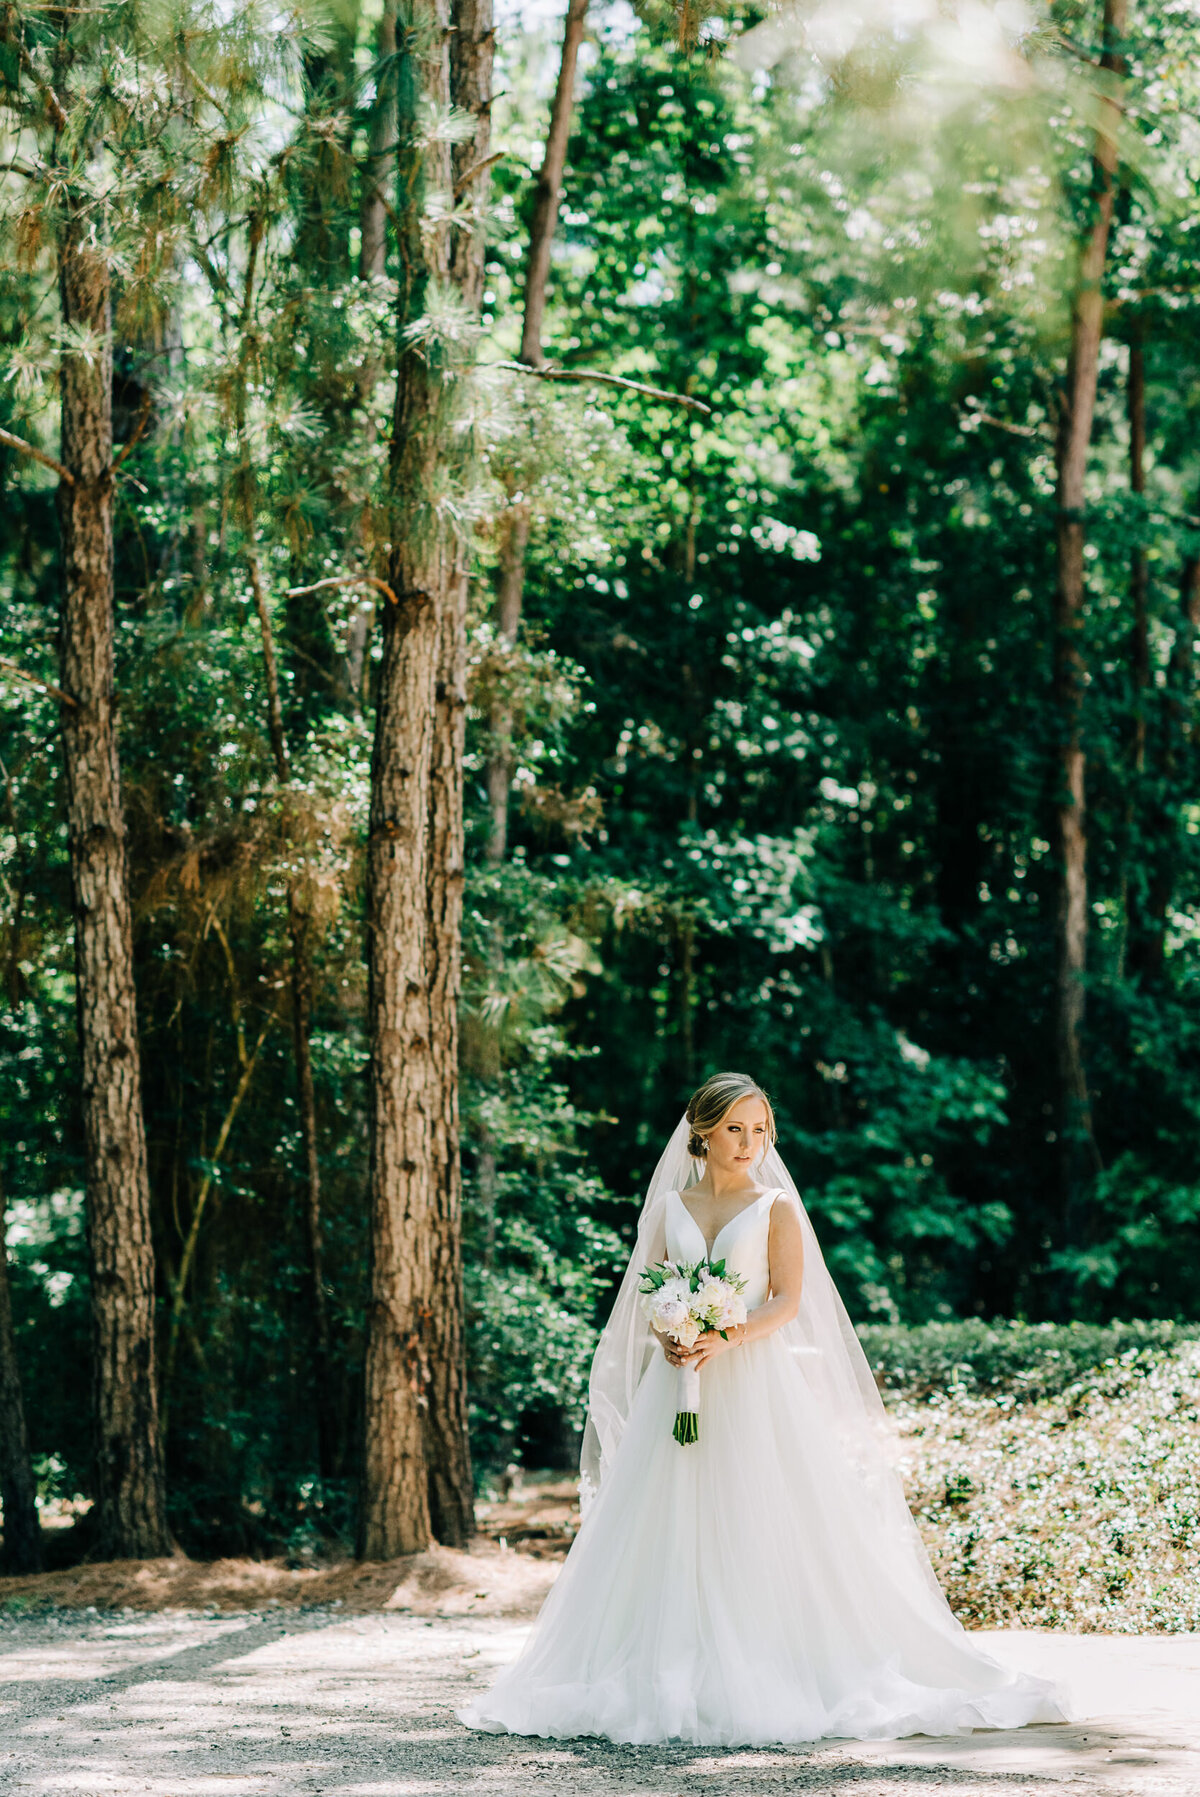 Montgomery-Bridals-Wedding-Photographer-Katelyn-20190614-0325